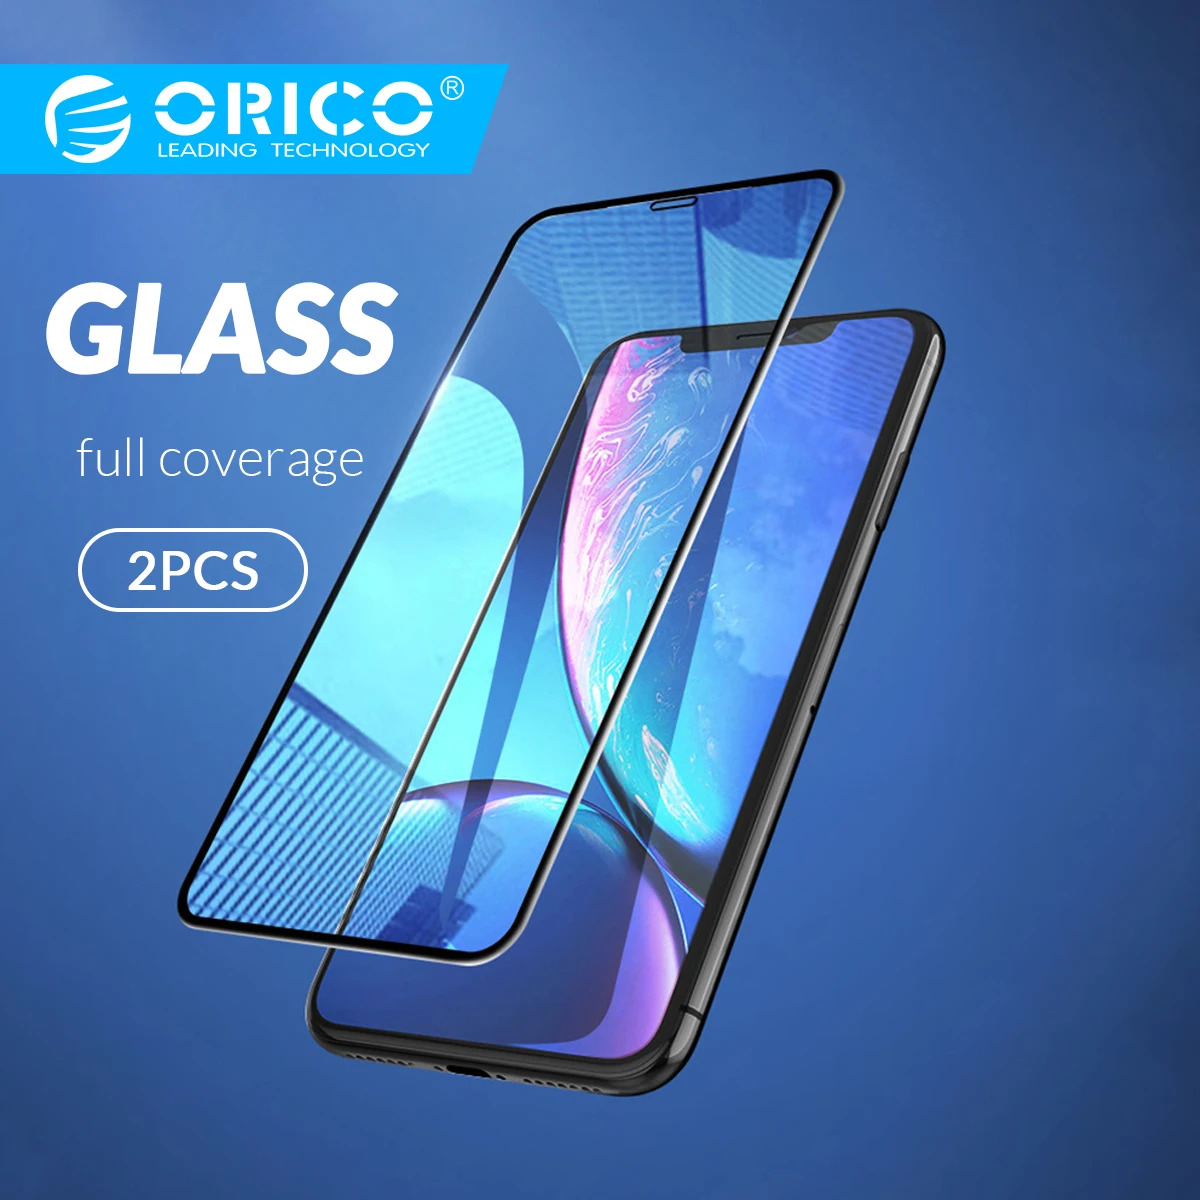 ORICO 3D стекло протектор экрана для iphone X XS Max закаленное защитное стекло на iphone XR защитная пленка защитная стеклянная пленка